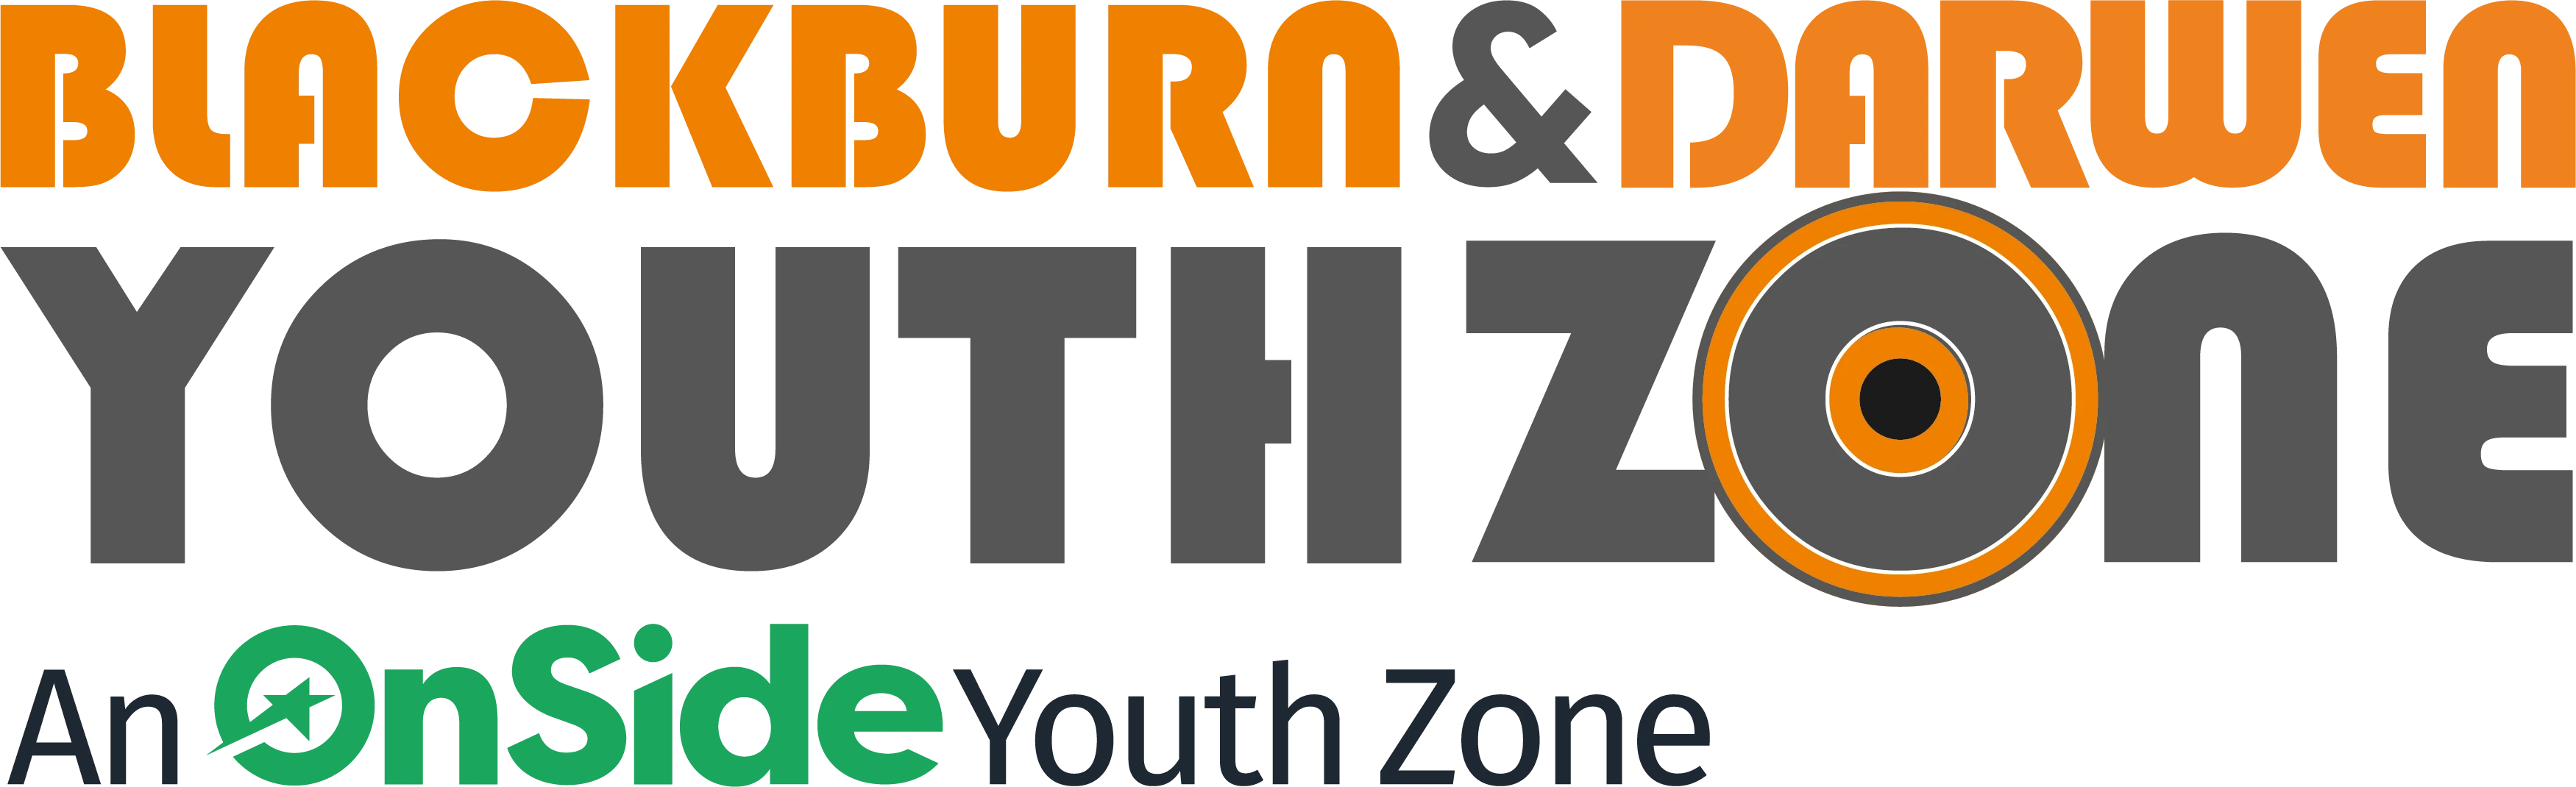 Blackburn & Darwen Youth Zone Logo